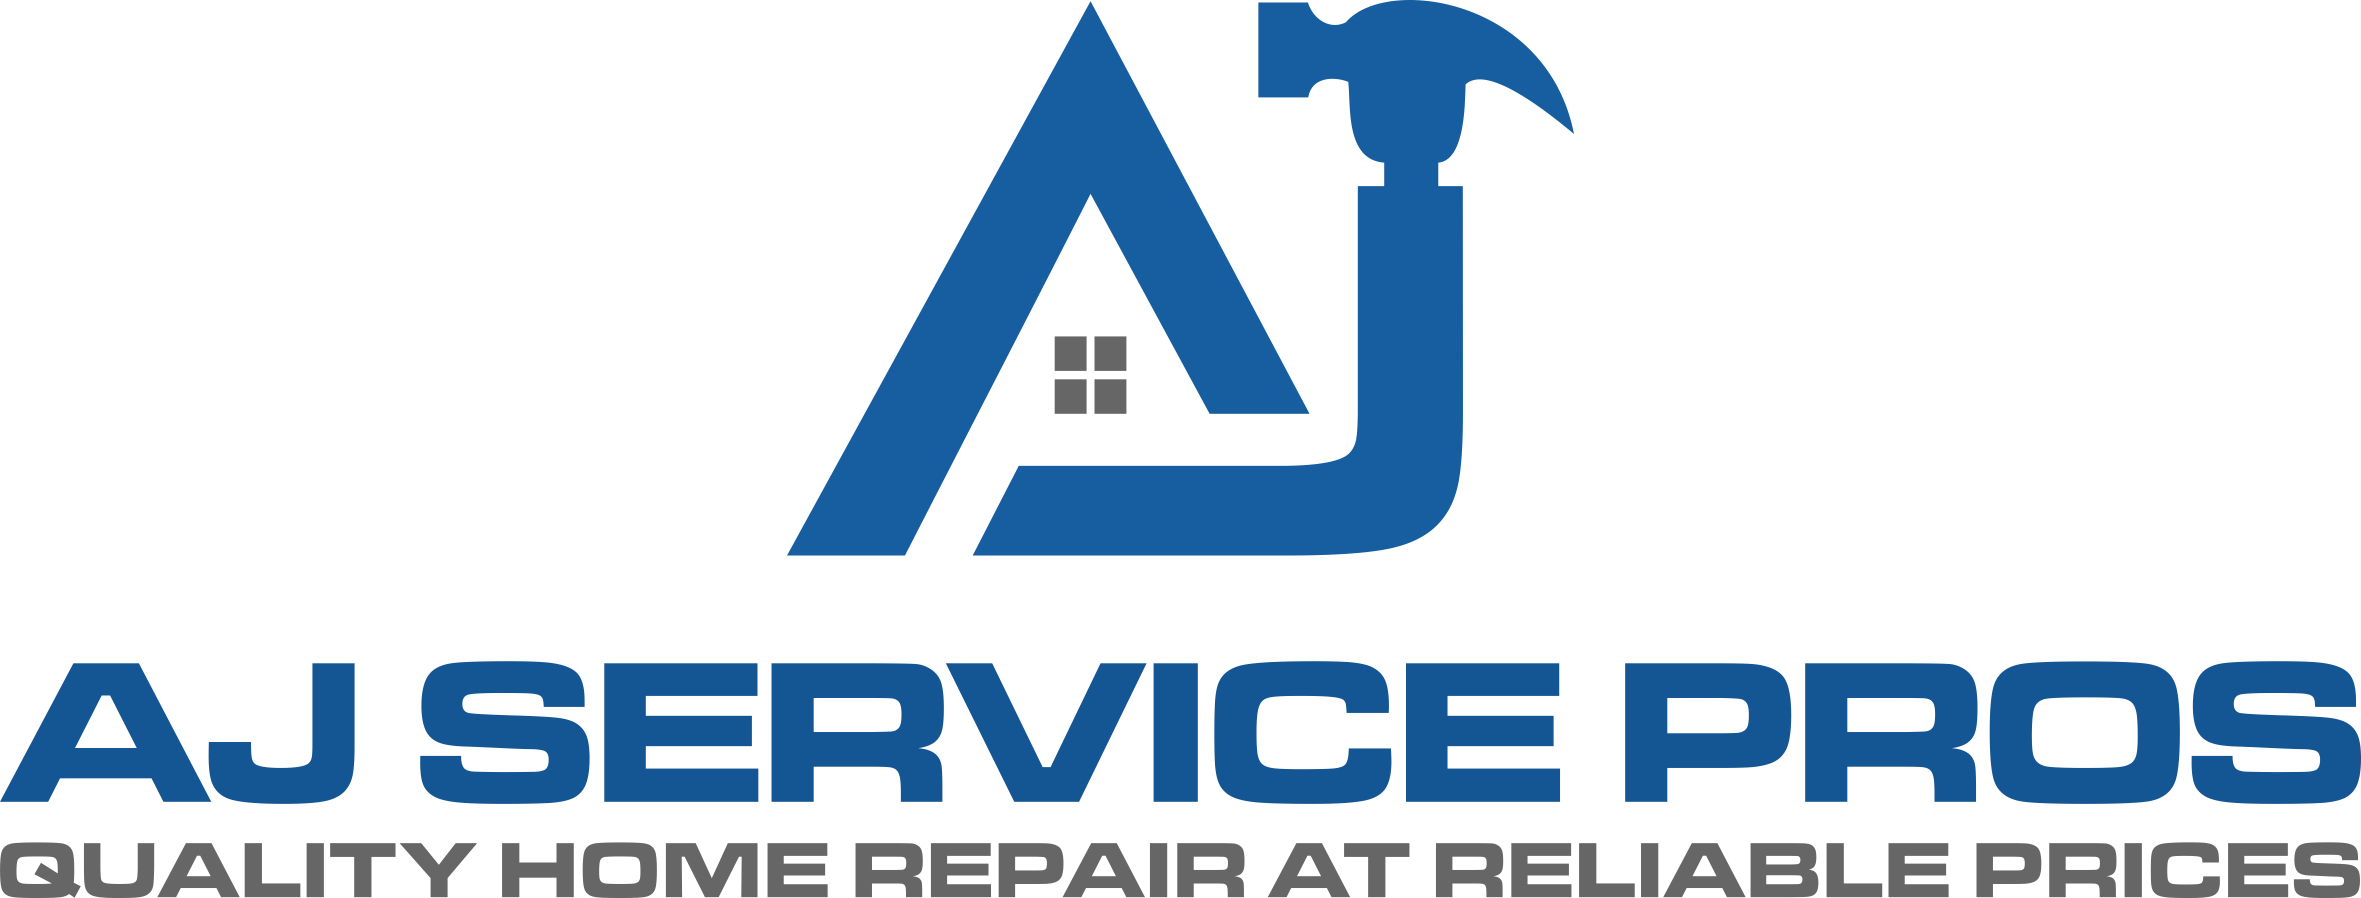 AJ Service Pros Logo